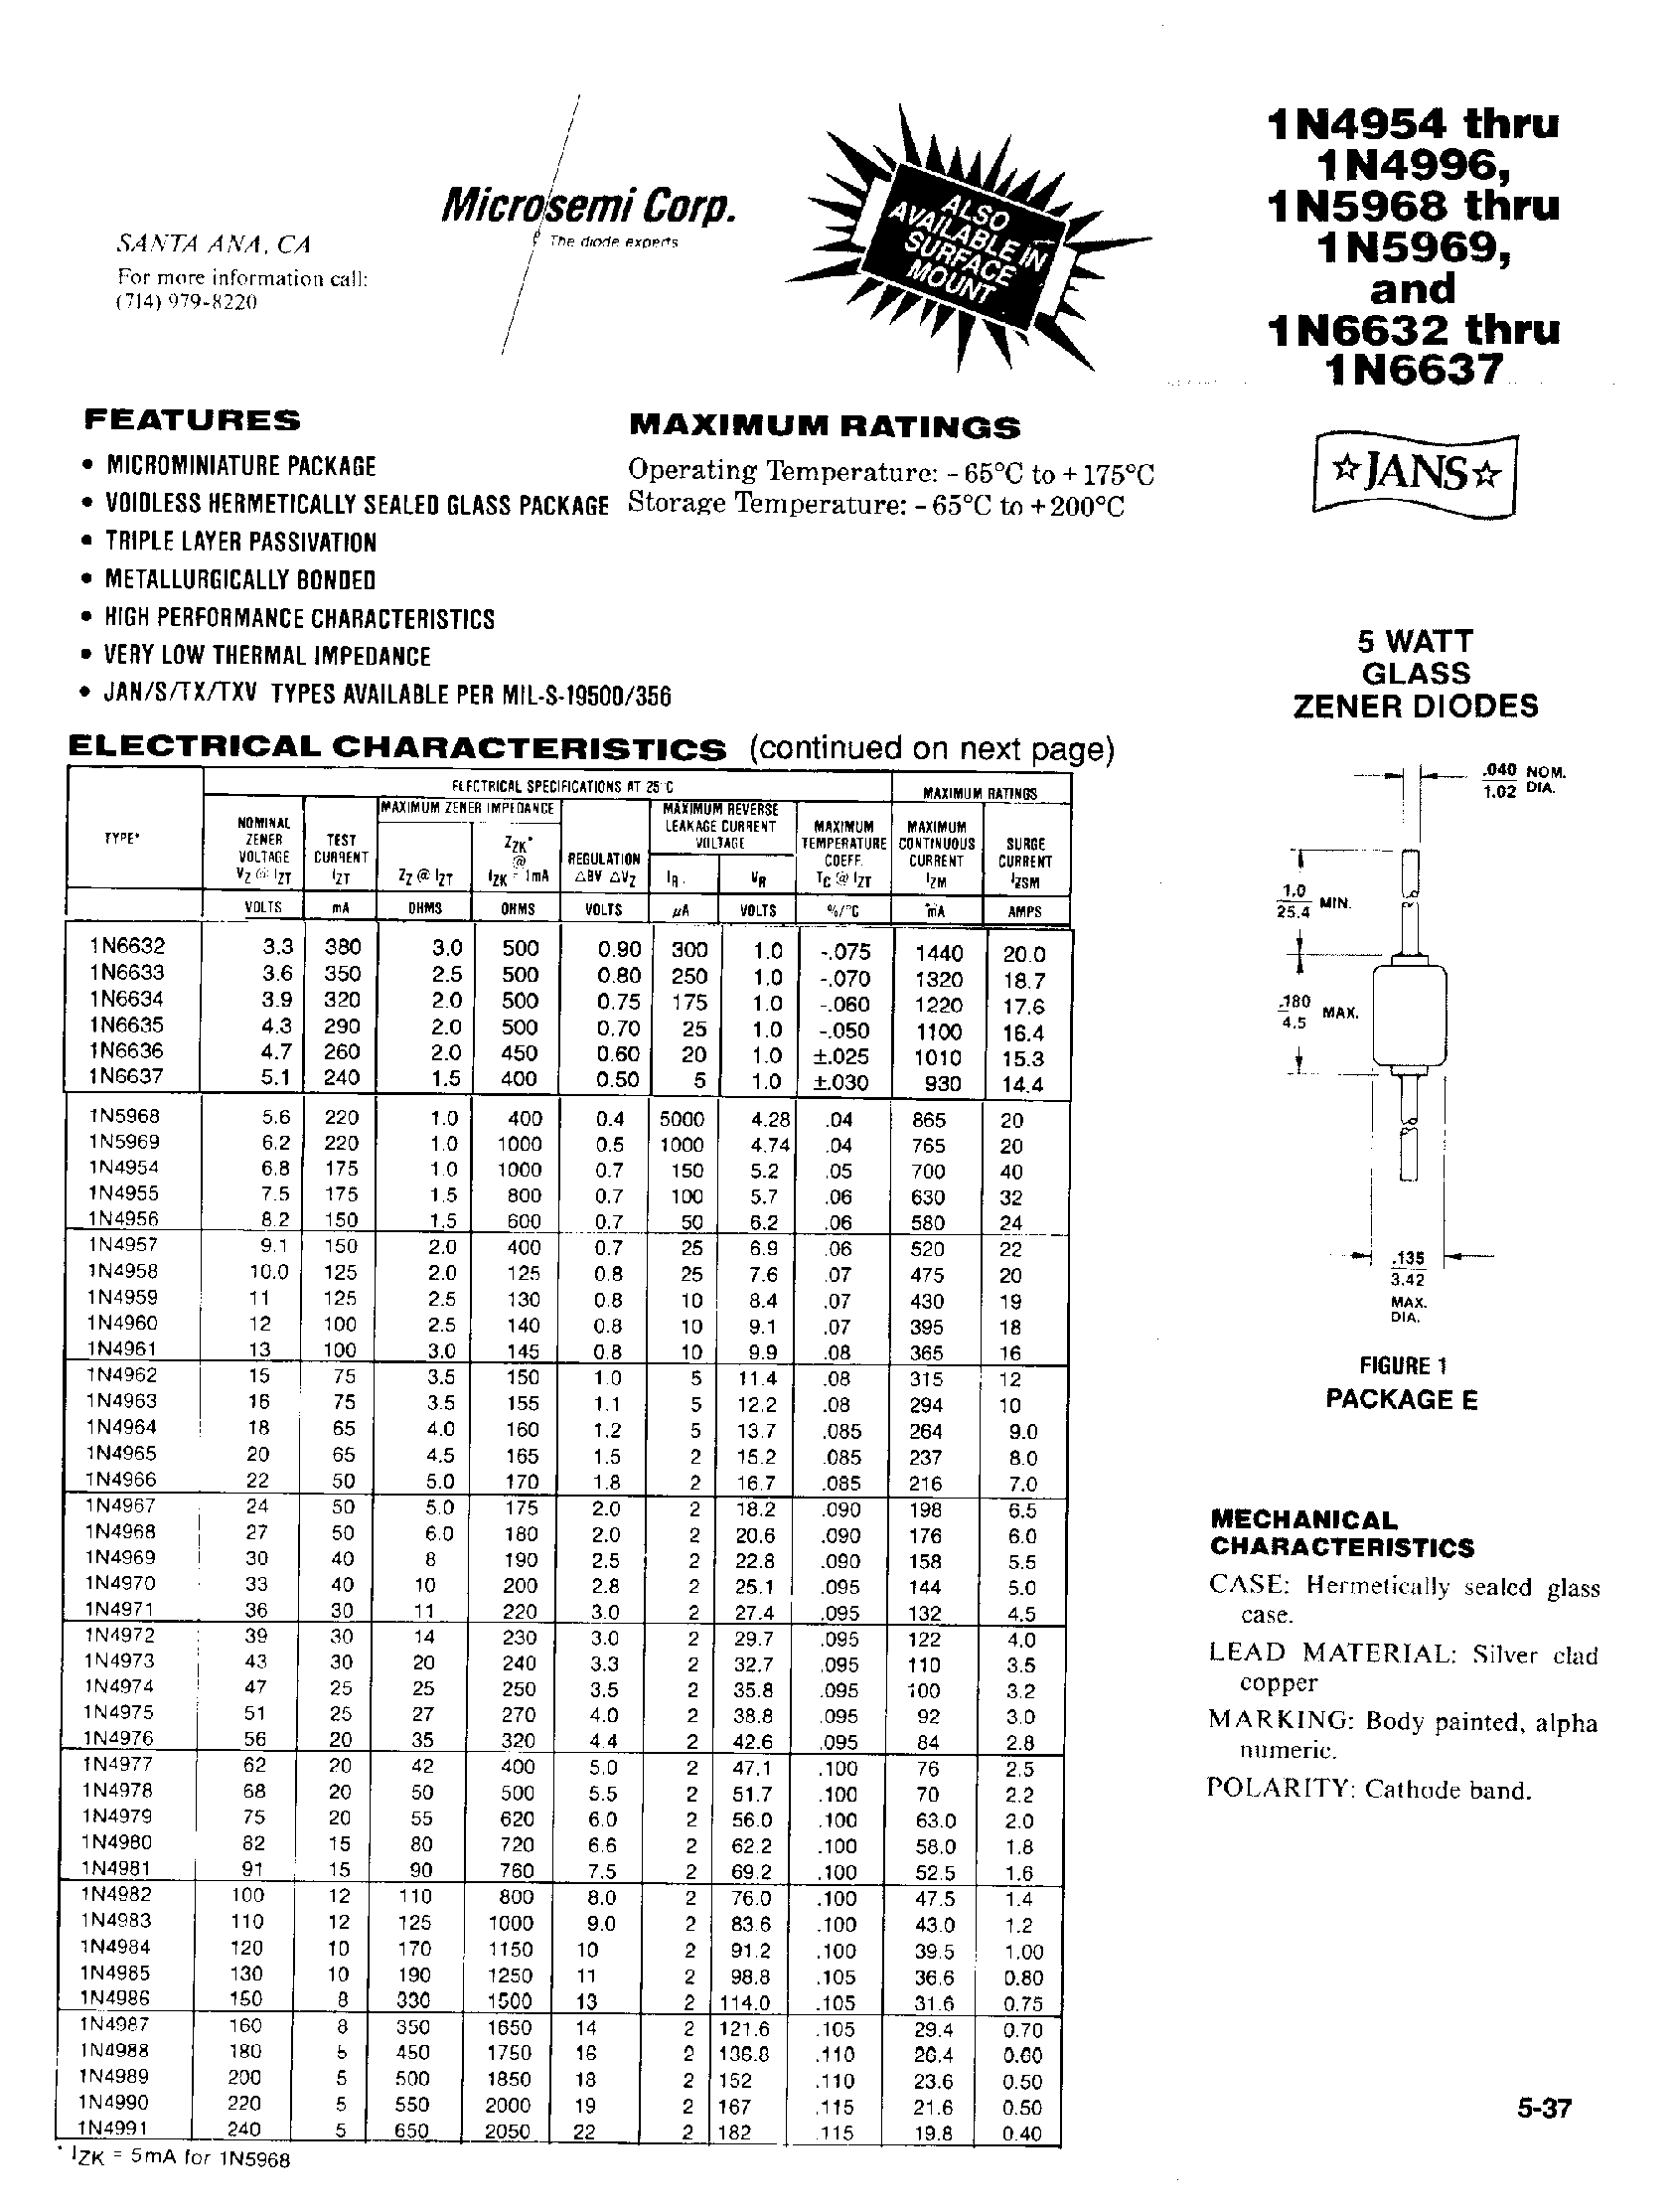 Datasheet 1N4987 - 5 WATT GLASS ZENER DIODES page 1